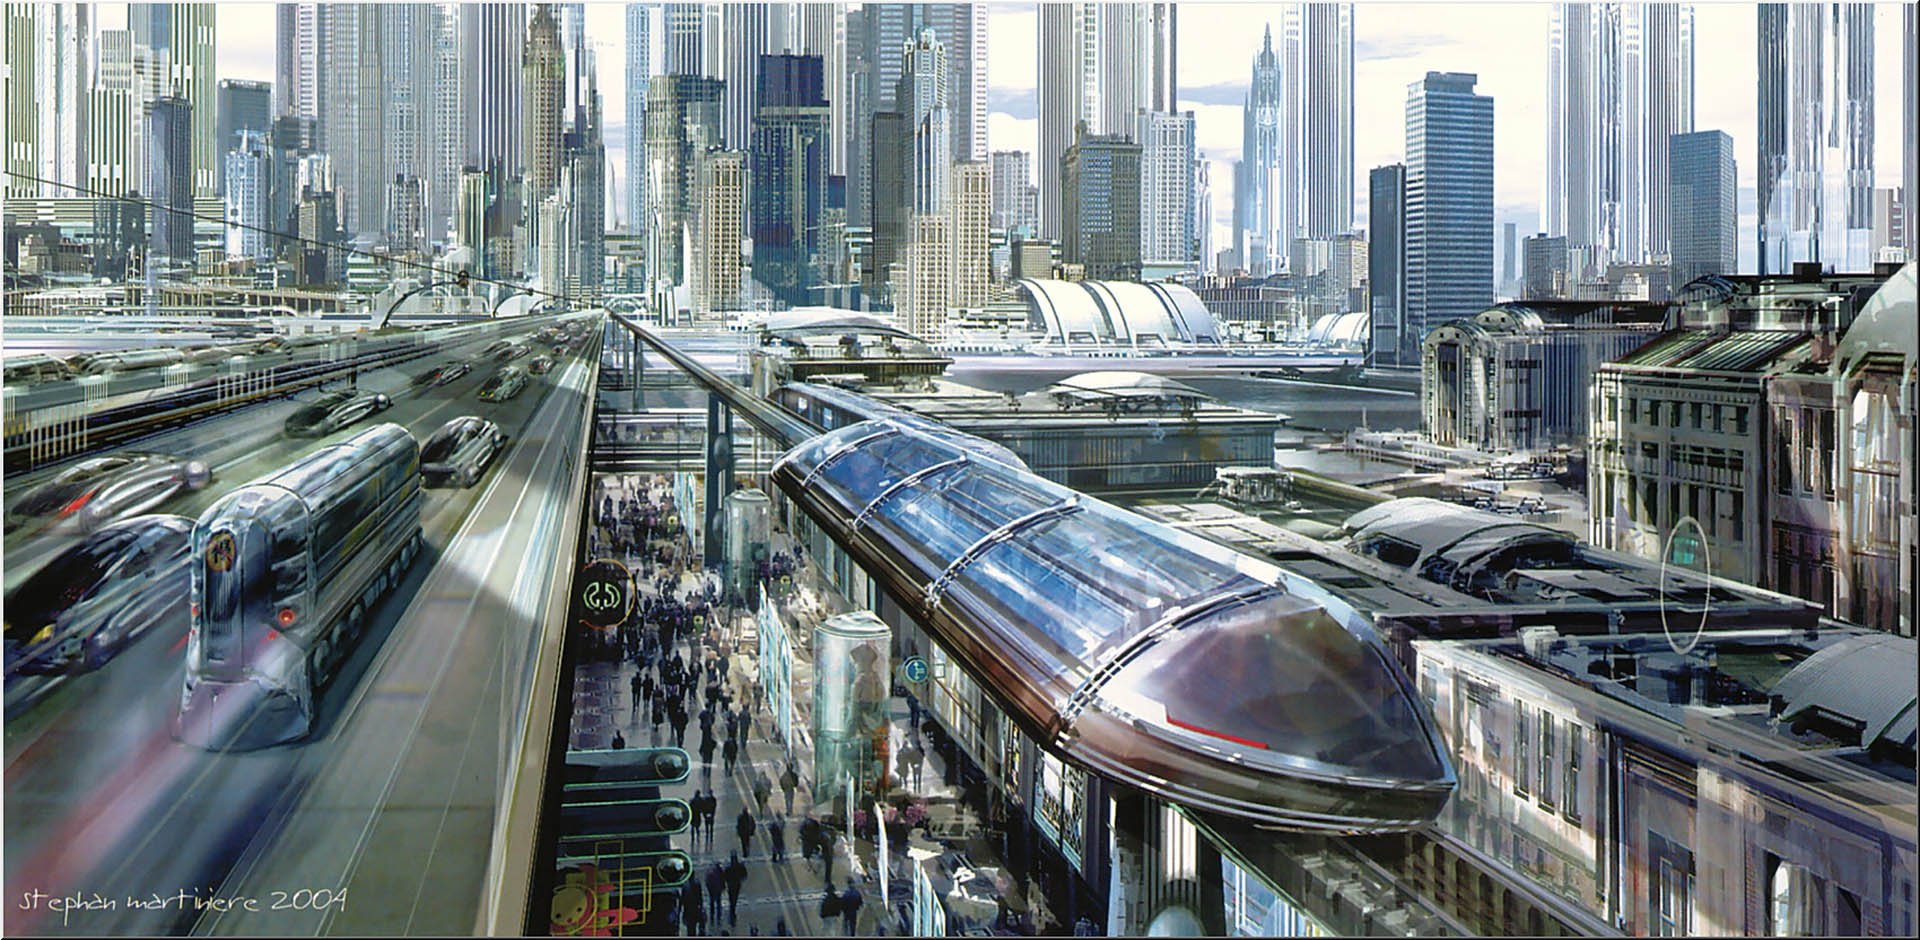 i robot, Action, Mystery, Sci fi, Futuristic, Robot, Technics, 1irobot, Crime, Dystopian, City, Train Wallpaper